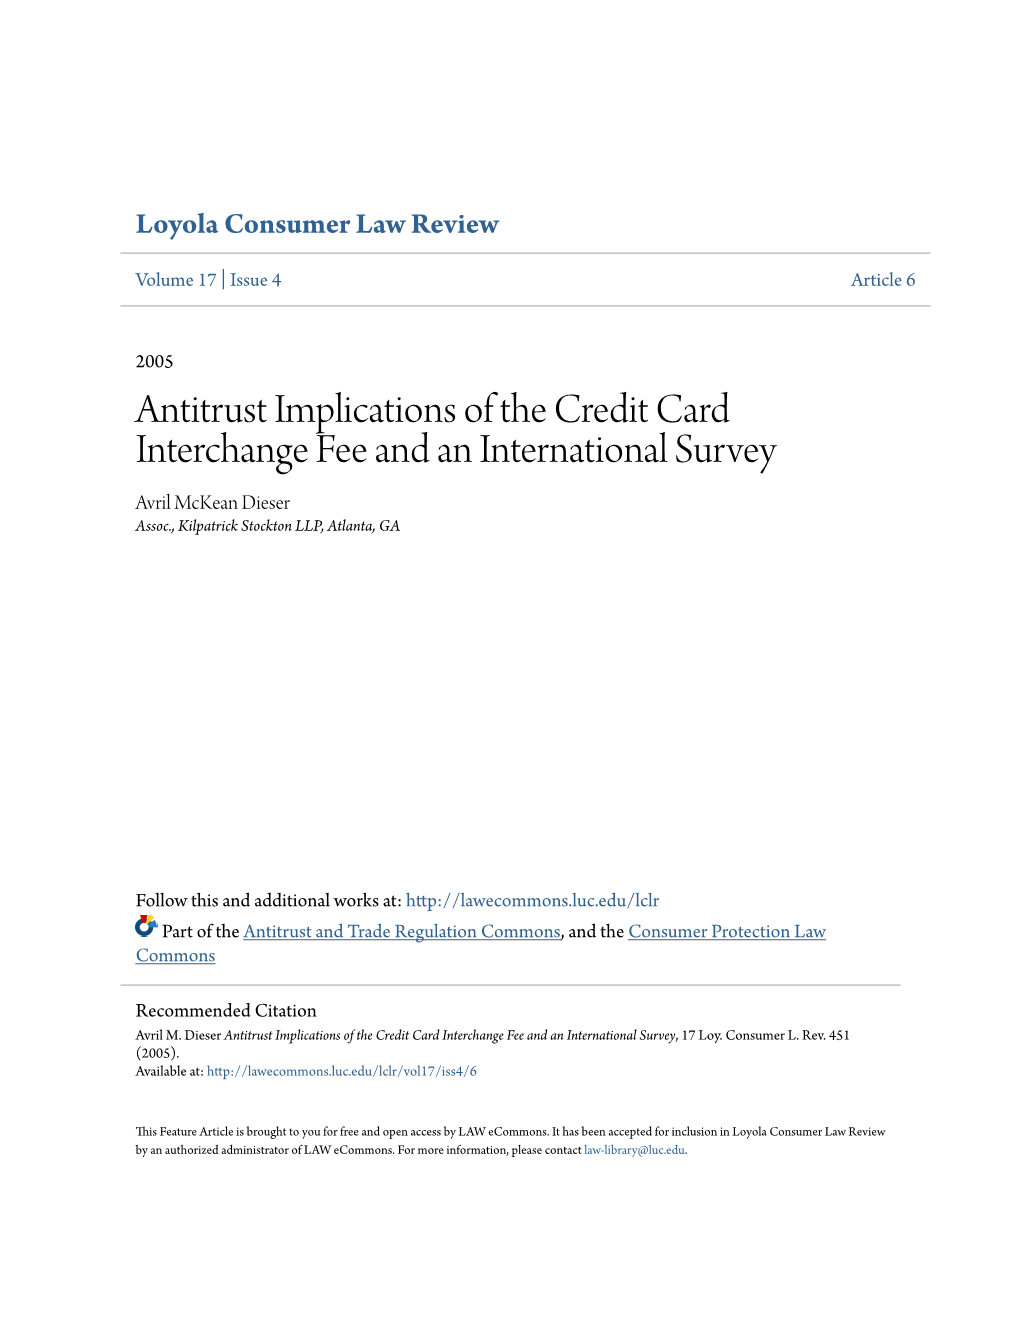 Antitrust Implications of the Credit Card Interchange Fee and an International Survey Avril Mckean Dieser Assoc., Kilpatrick Stockton LLP, Atlanta, GA